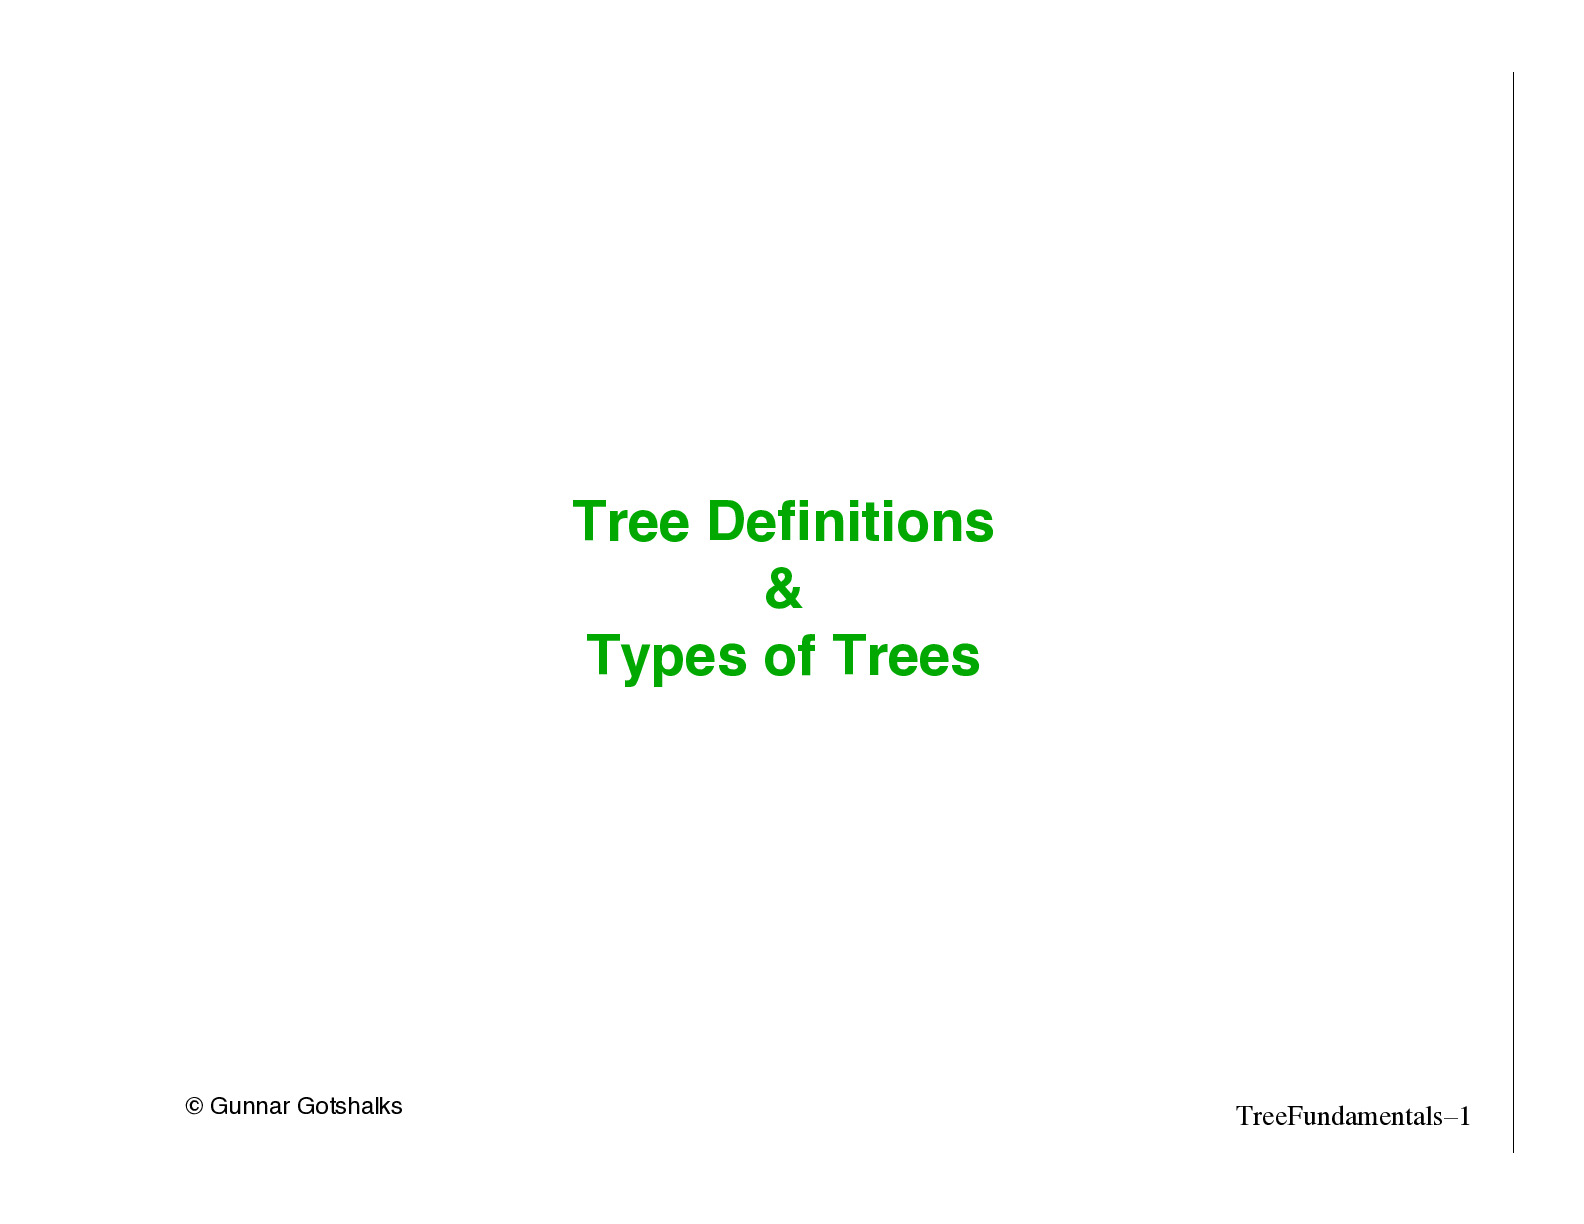 17-TreeFundamentals